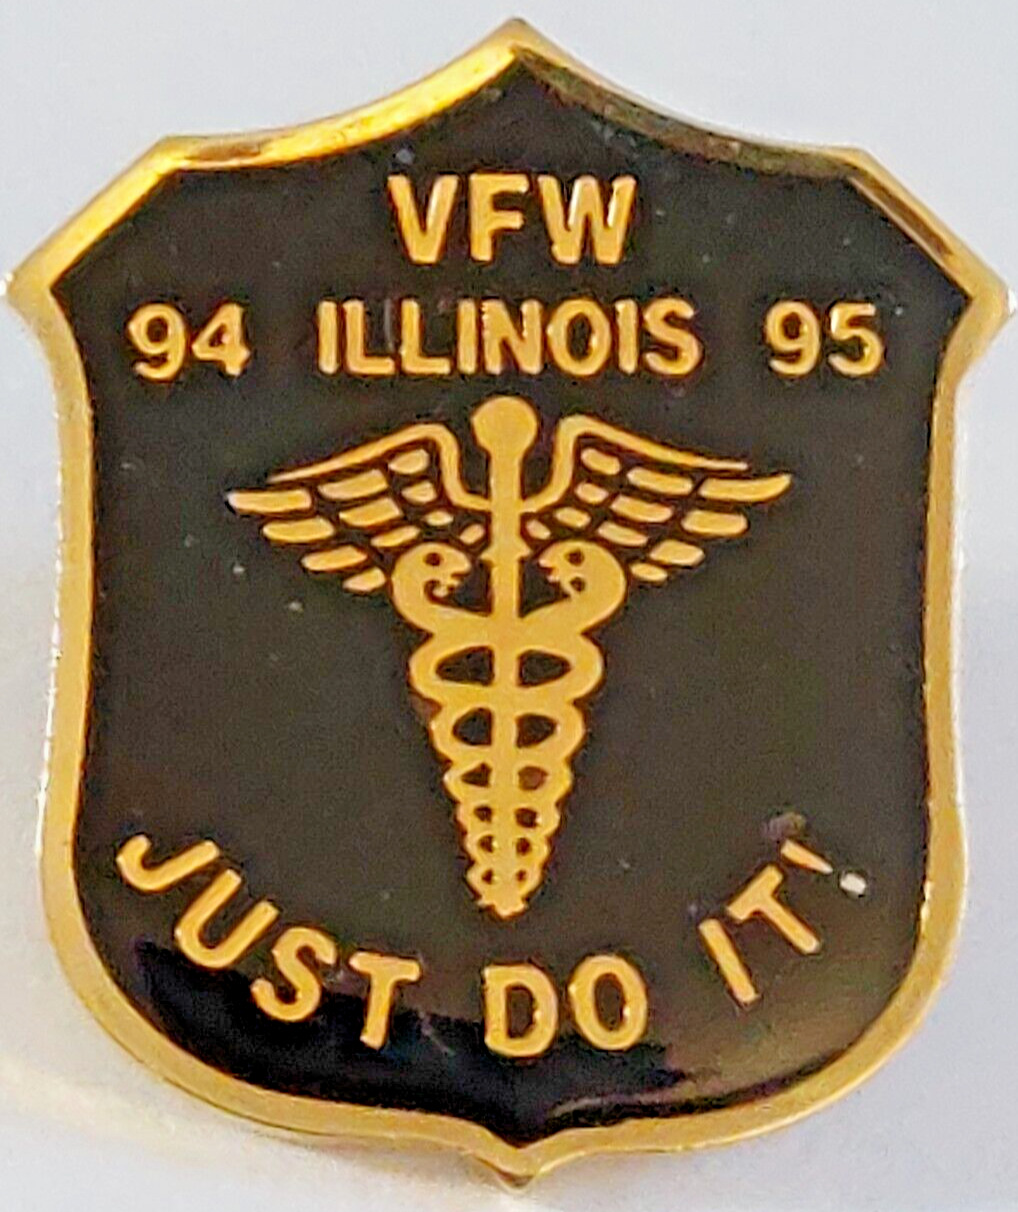 VFW Illinois 1994-1995 Just Do It Lapel Pin (092223)